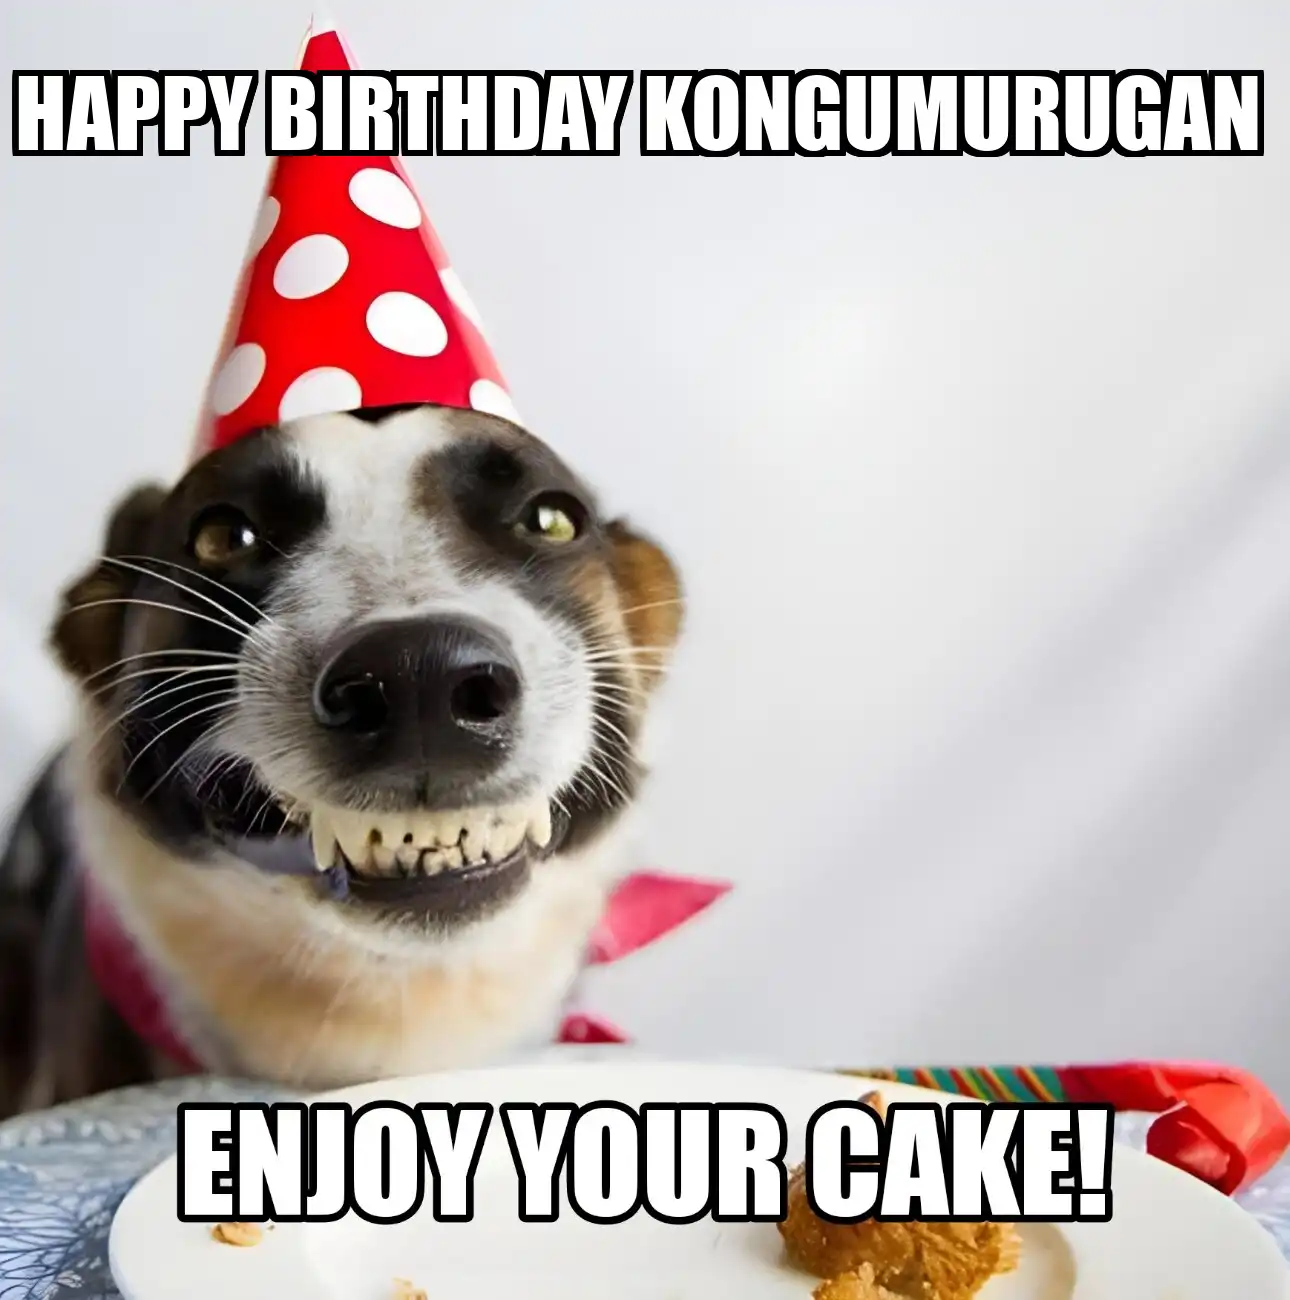 Happy Birthday Kongumurugan Enjoy Your Cake Dog Meme